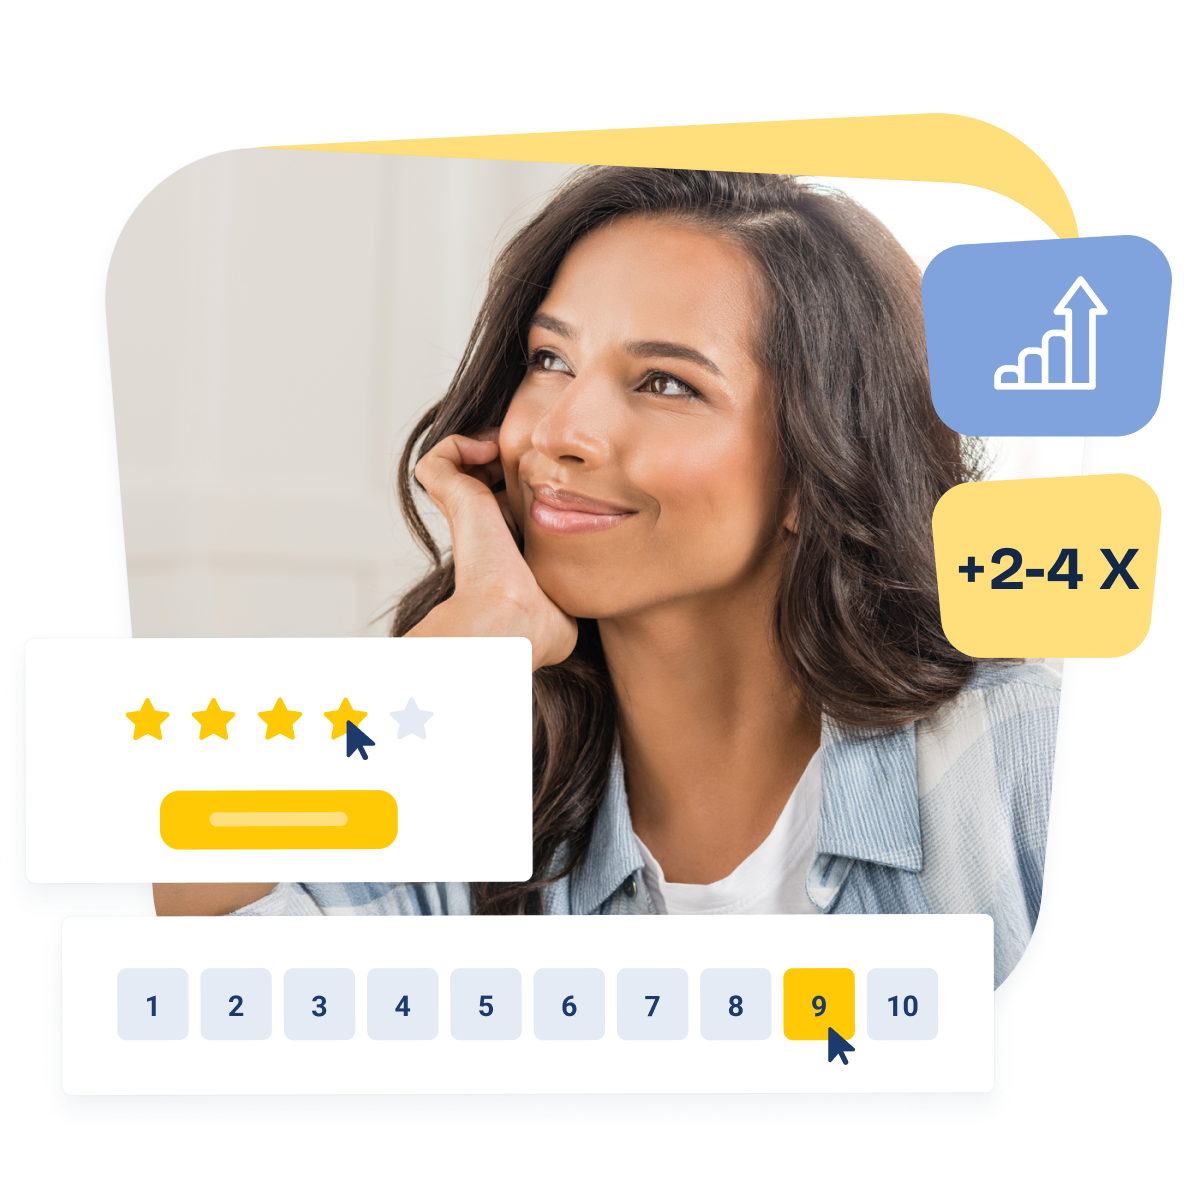 customer satisfaction survey star or nps rating